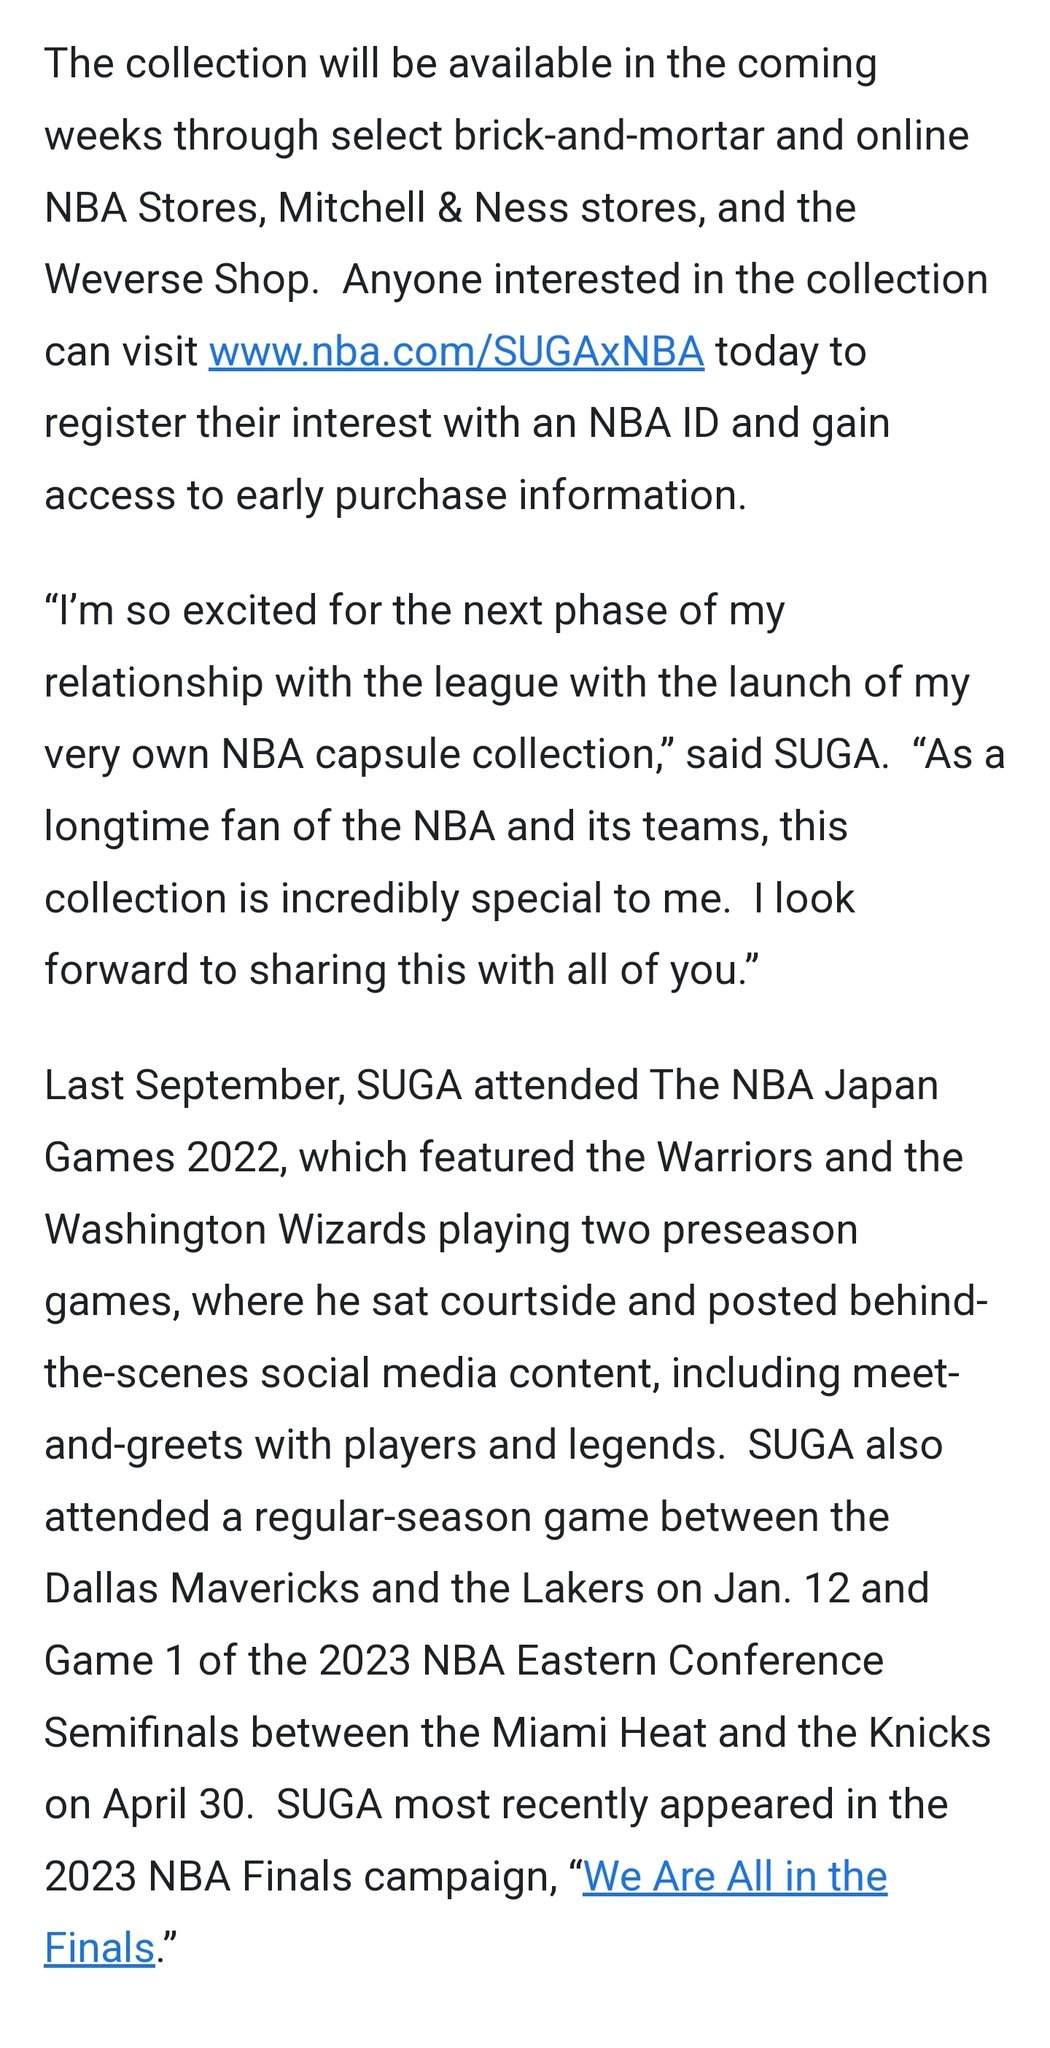 NBA Ambassador and BTS star SUGA collaborates with Mitchell & Ness